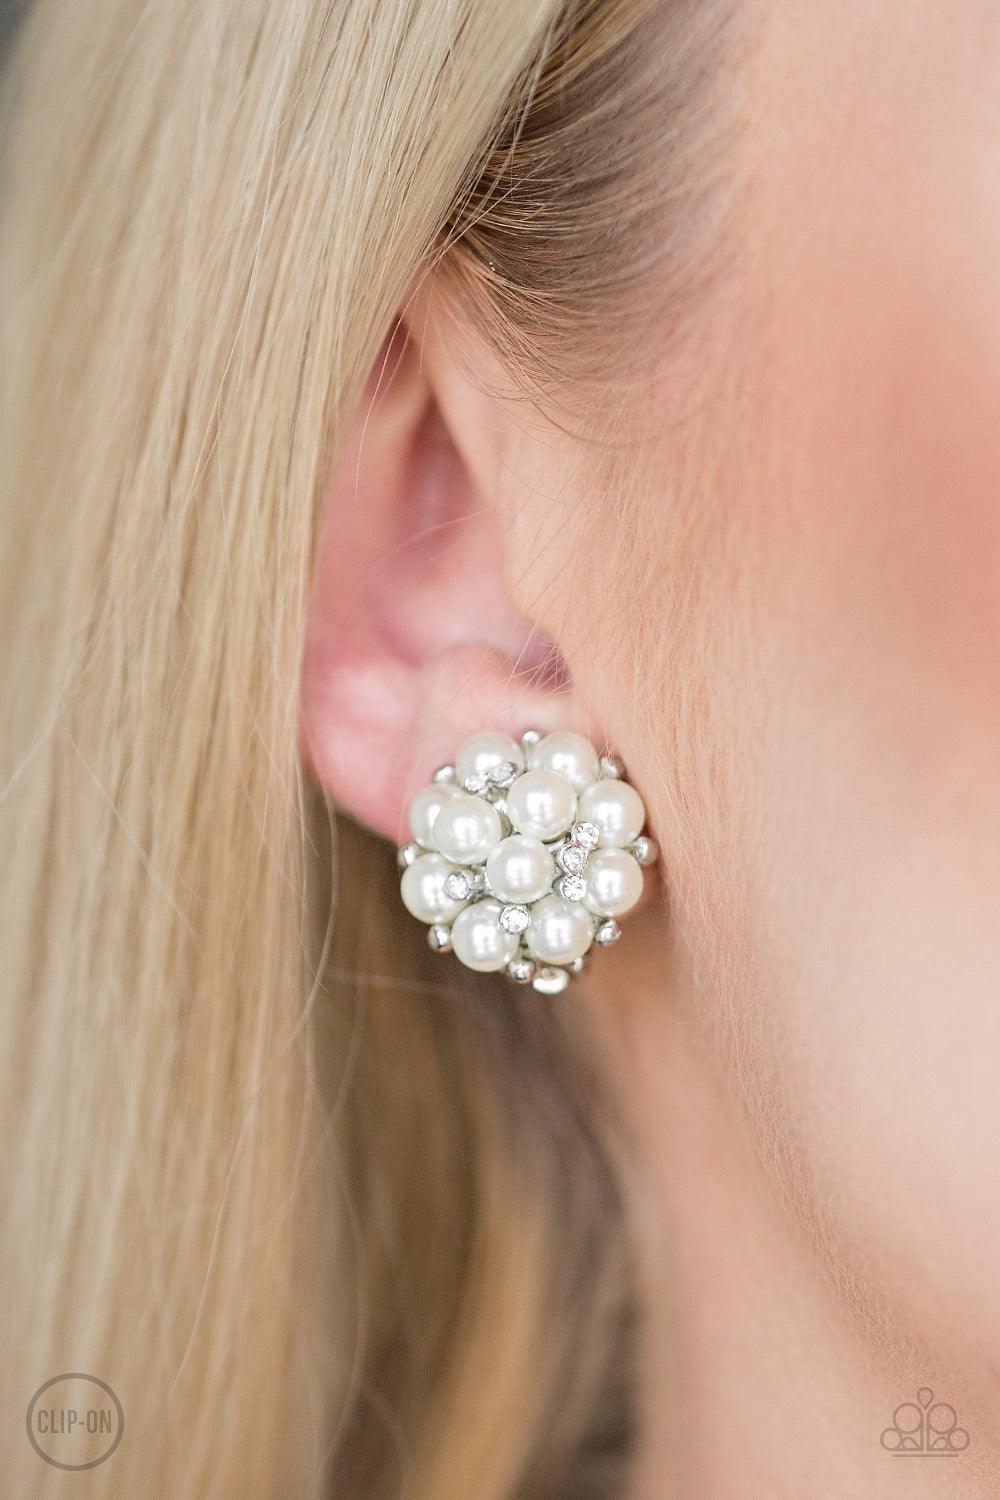 Par Pearl *Clip-On Earrings - Beautifully Blinged